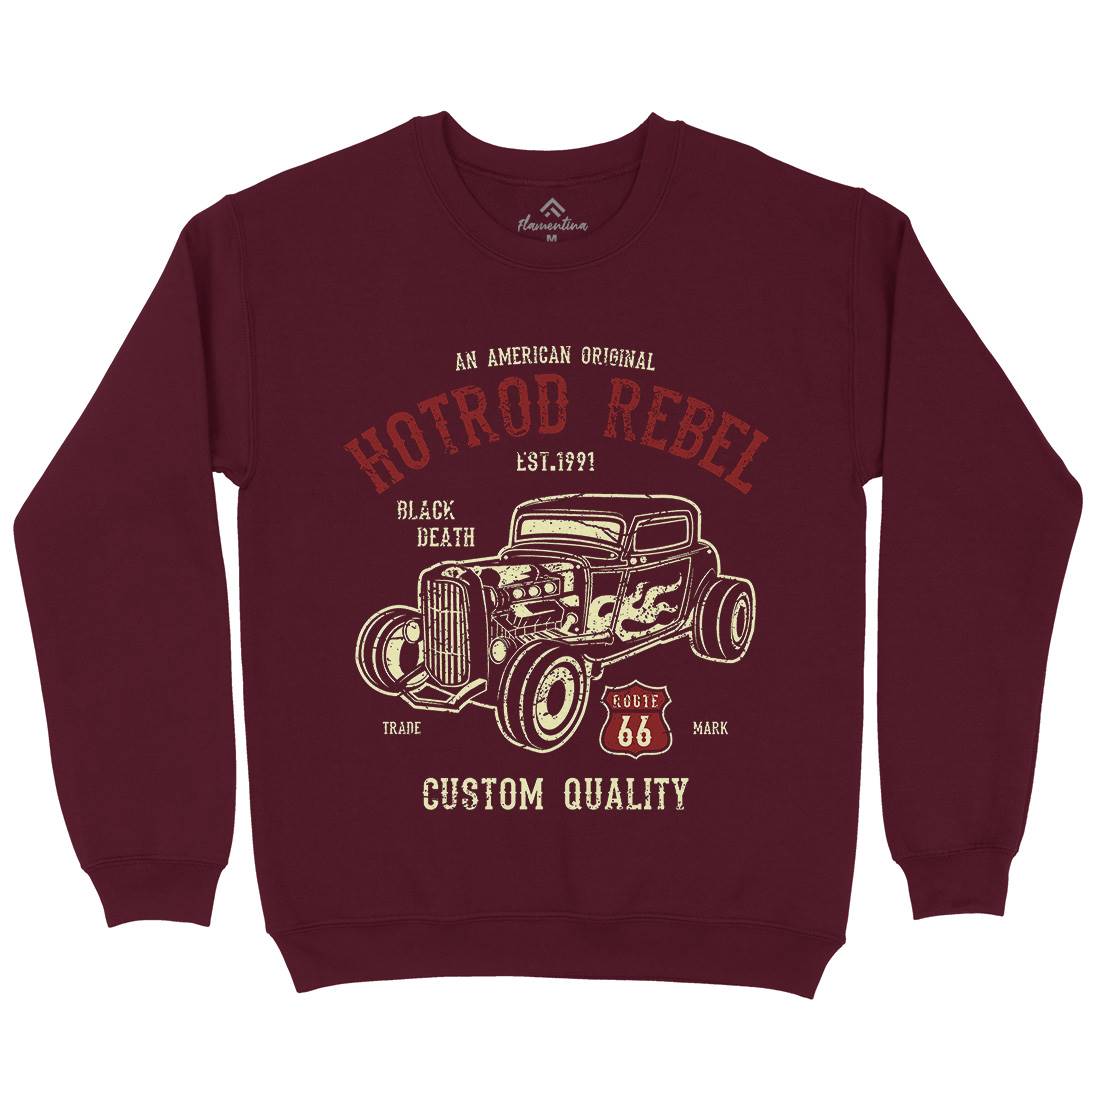 Hot Rod Rebel Kids Crew Neck Sweatshirt Cars A067